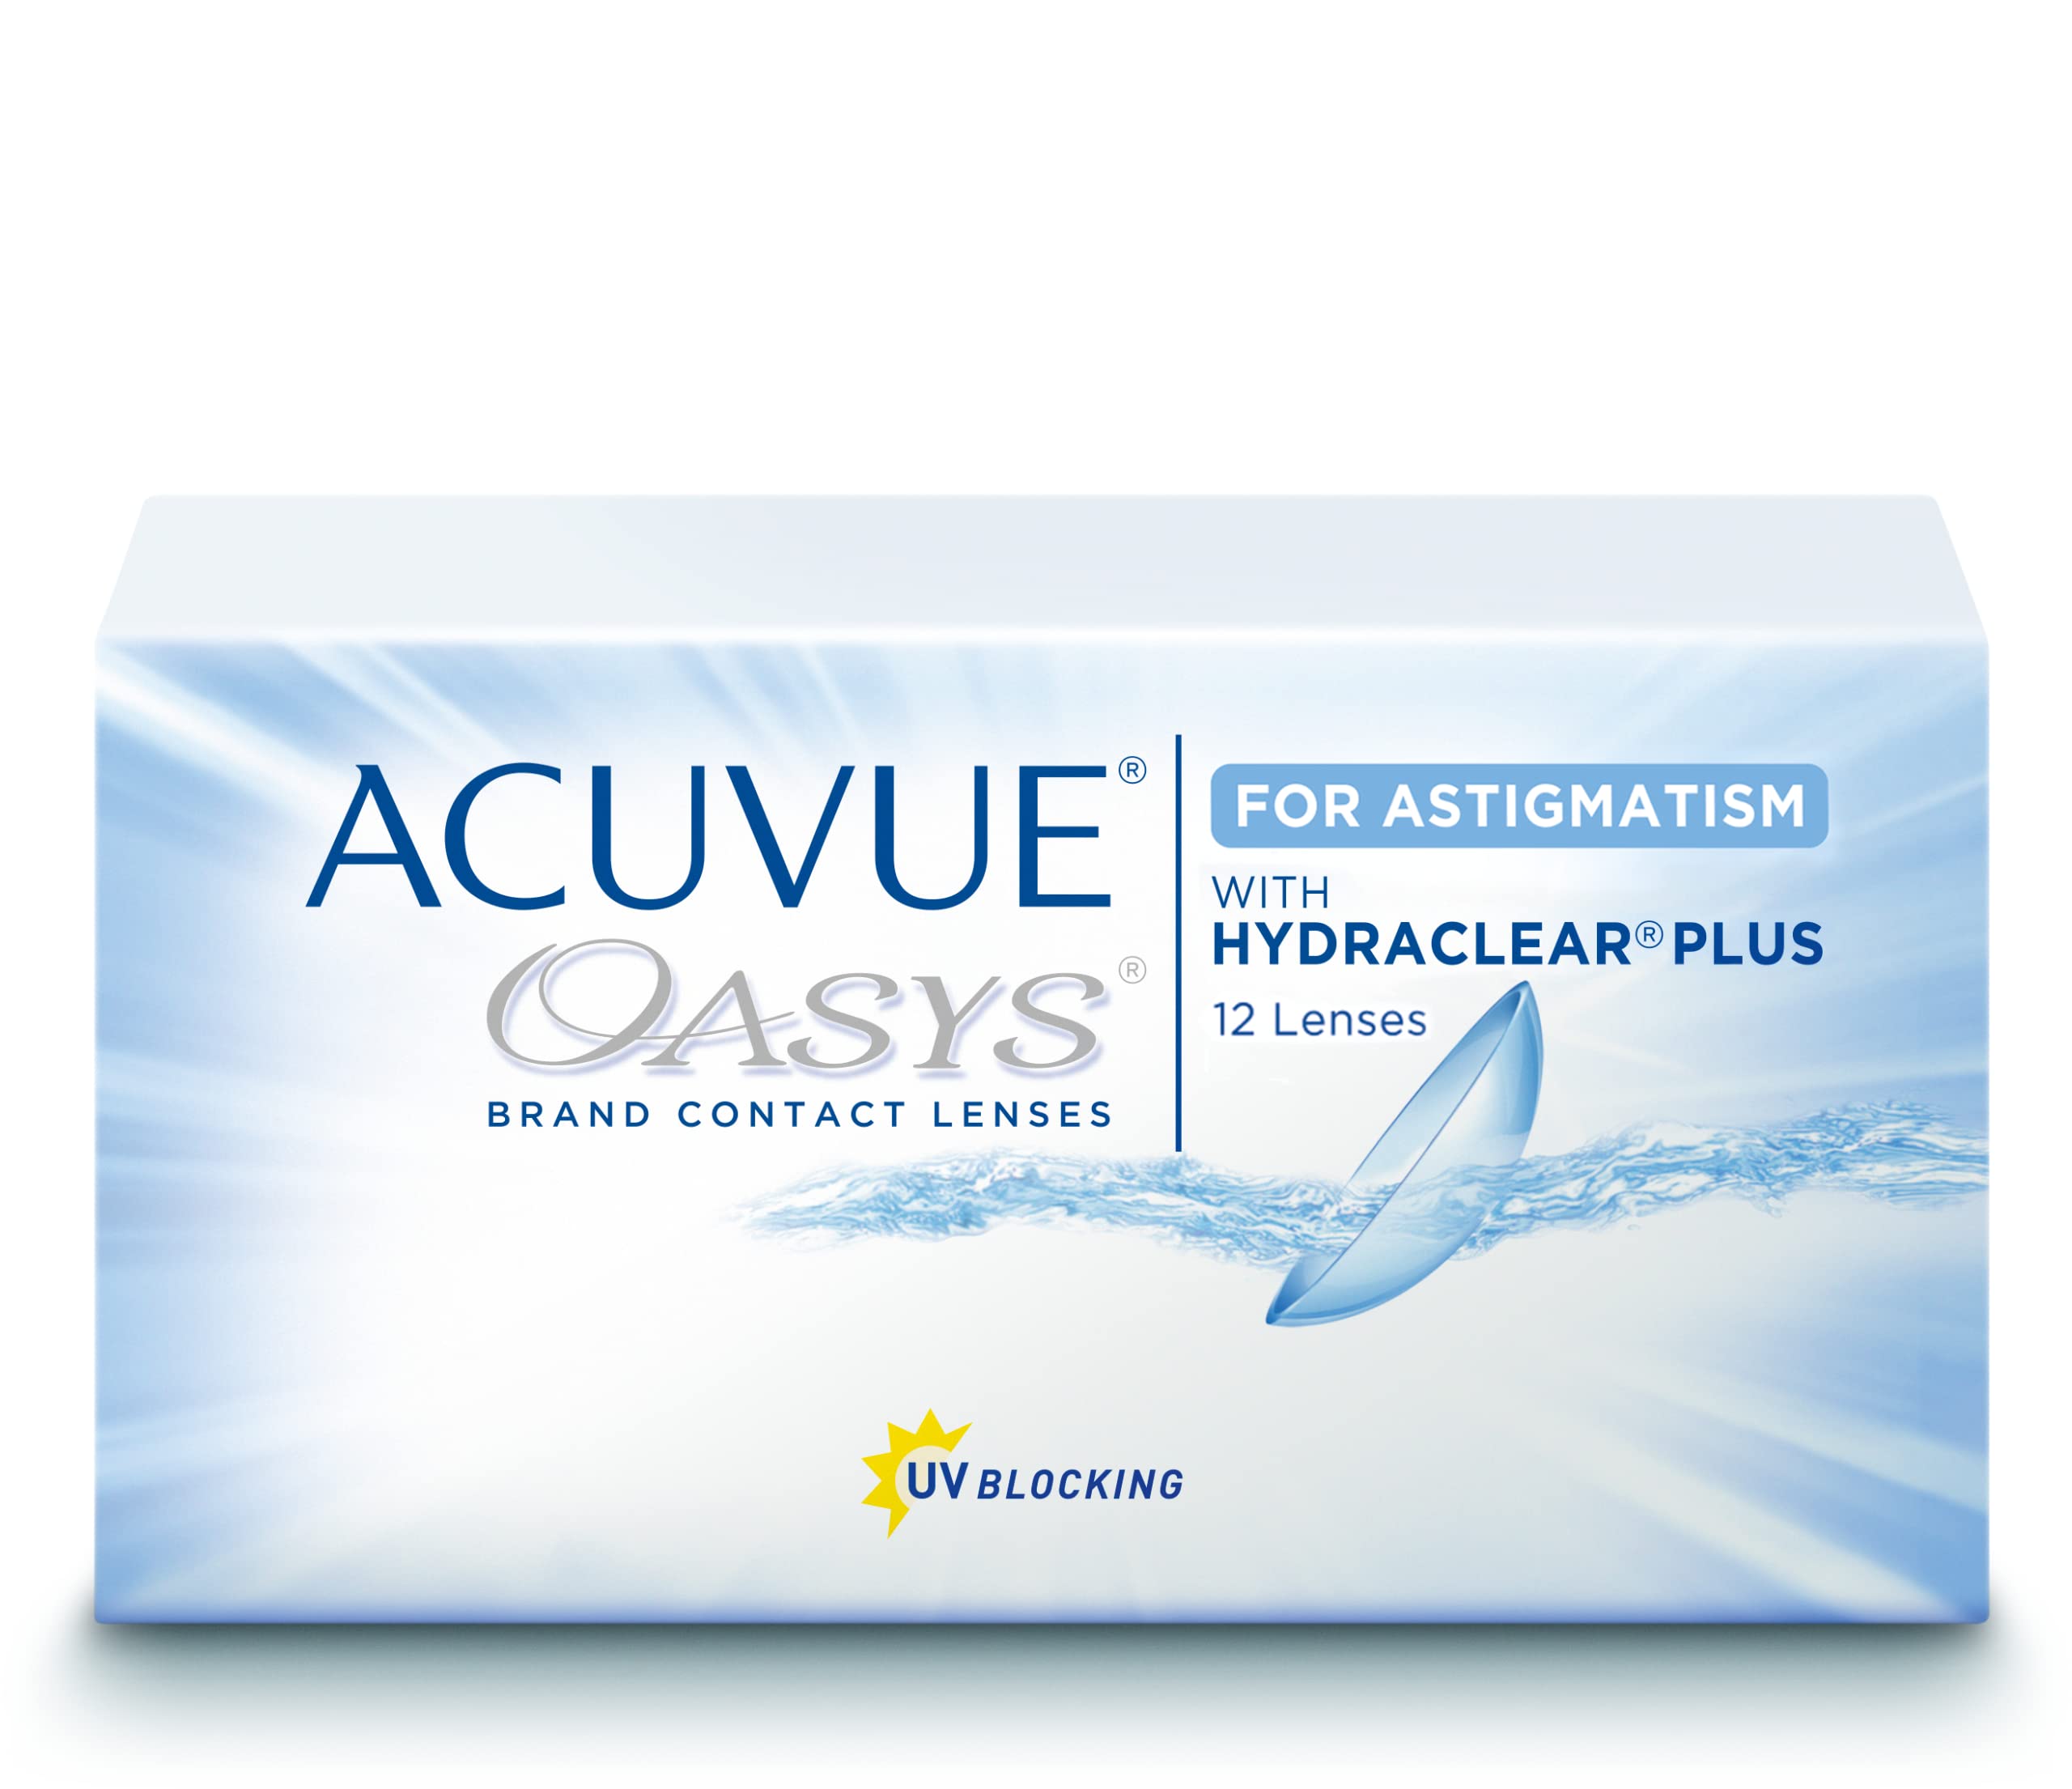 Acuvue Oasys for Astigmatism 2-Wochenlinsen weich, 12 Stück/BC 8.6 mm/DIA 14.5 / CYL -2.25 / Achse 160/0.5 Dioptrien